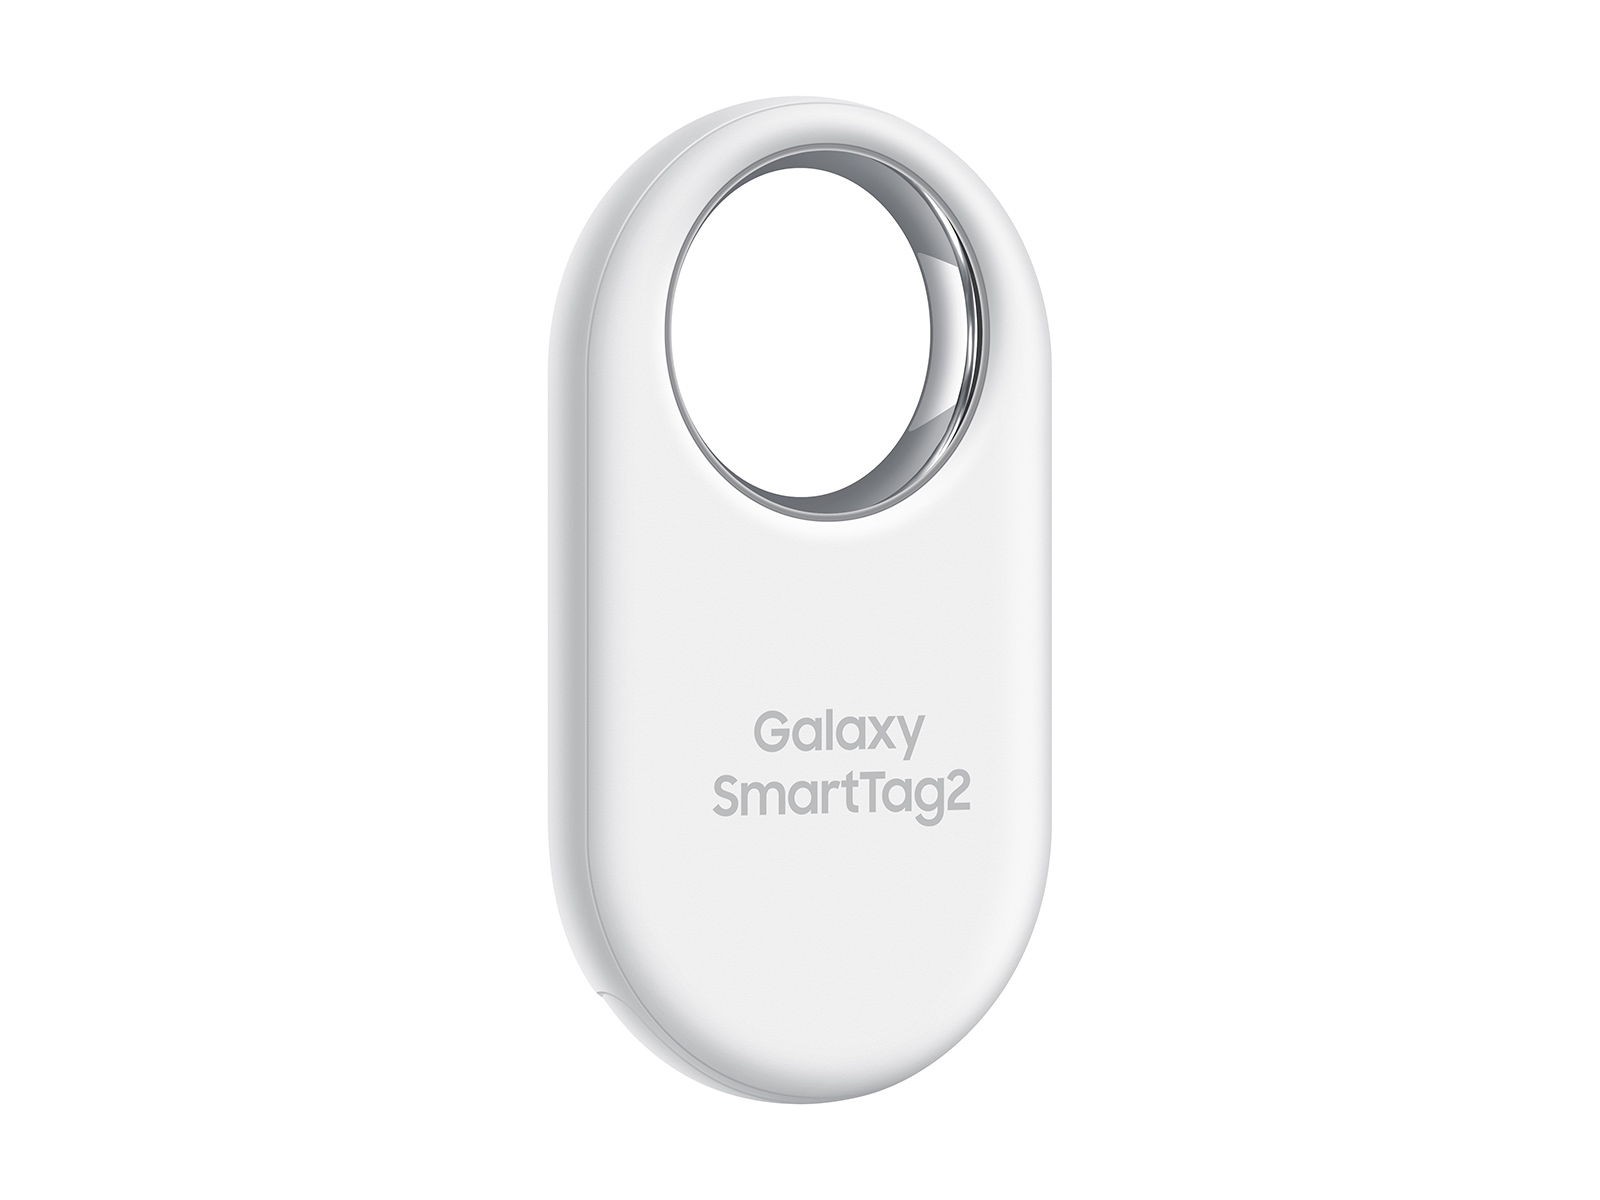 Samsung Galaxy SmartTag 2 review: Handy Galaxy companion - Tech Advisor